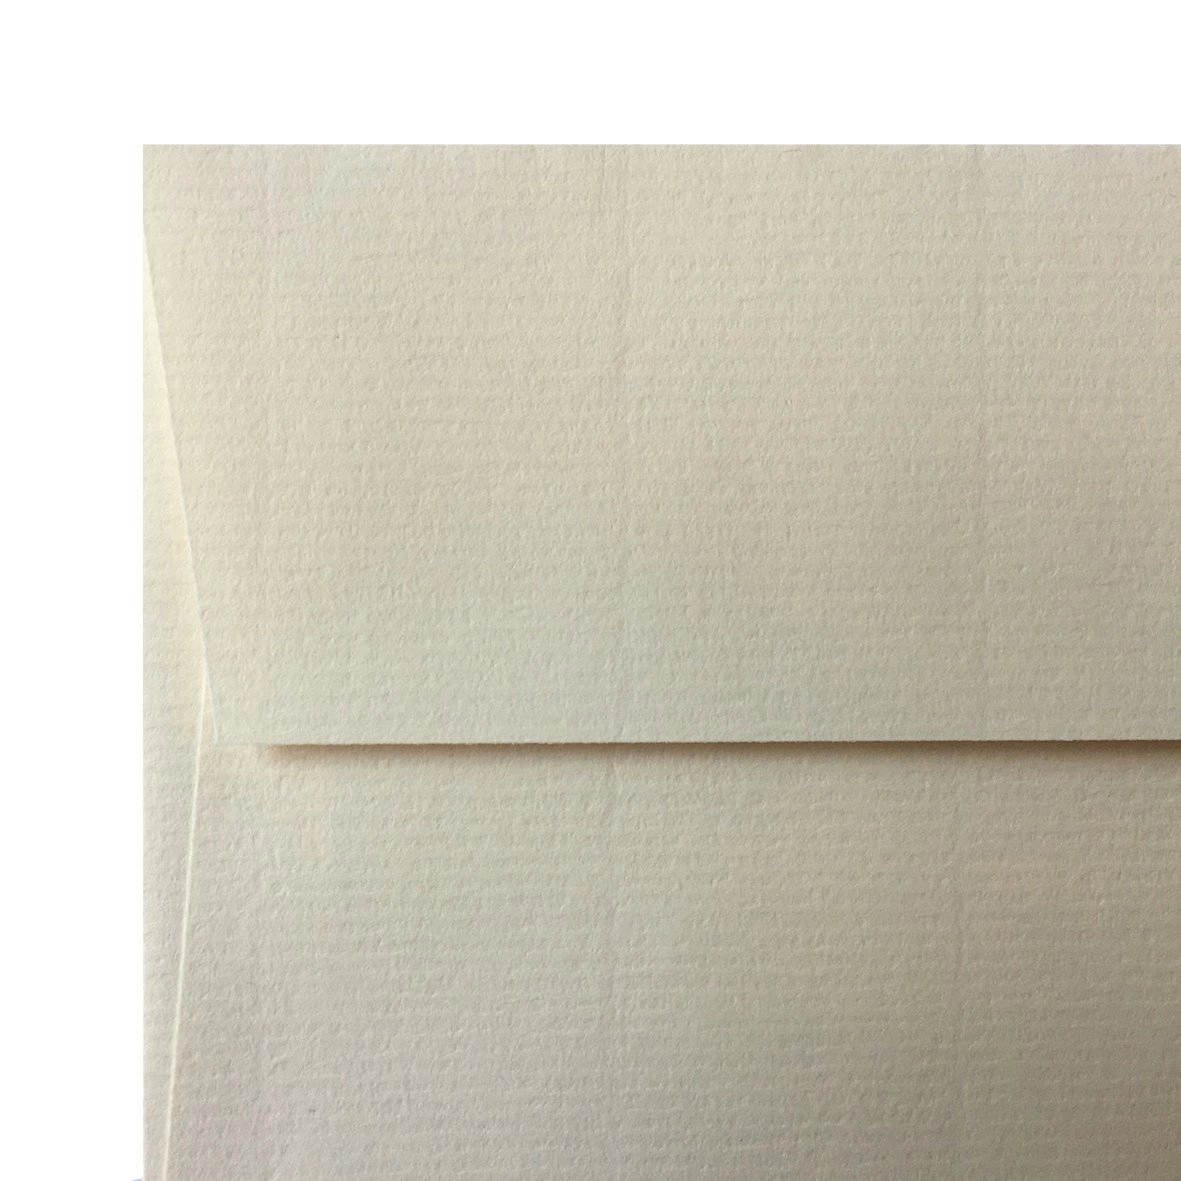 laid envelopes